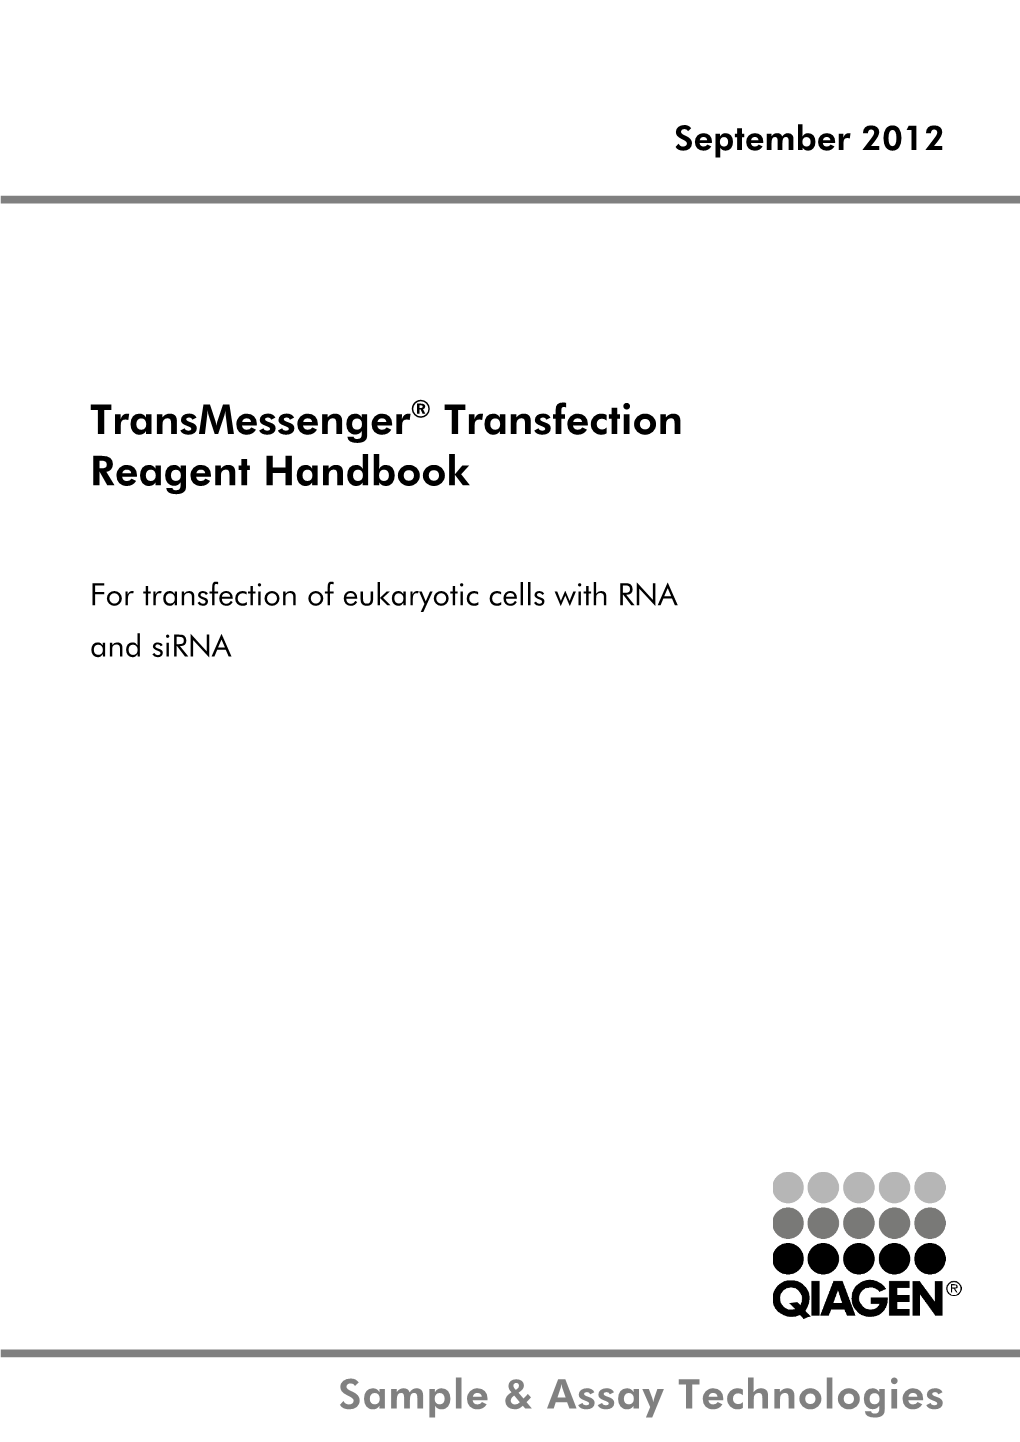 Transmessenger Transfection Reagent Handbook 09/2012 3 Kit Contents